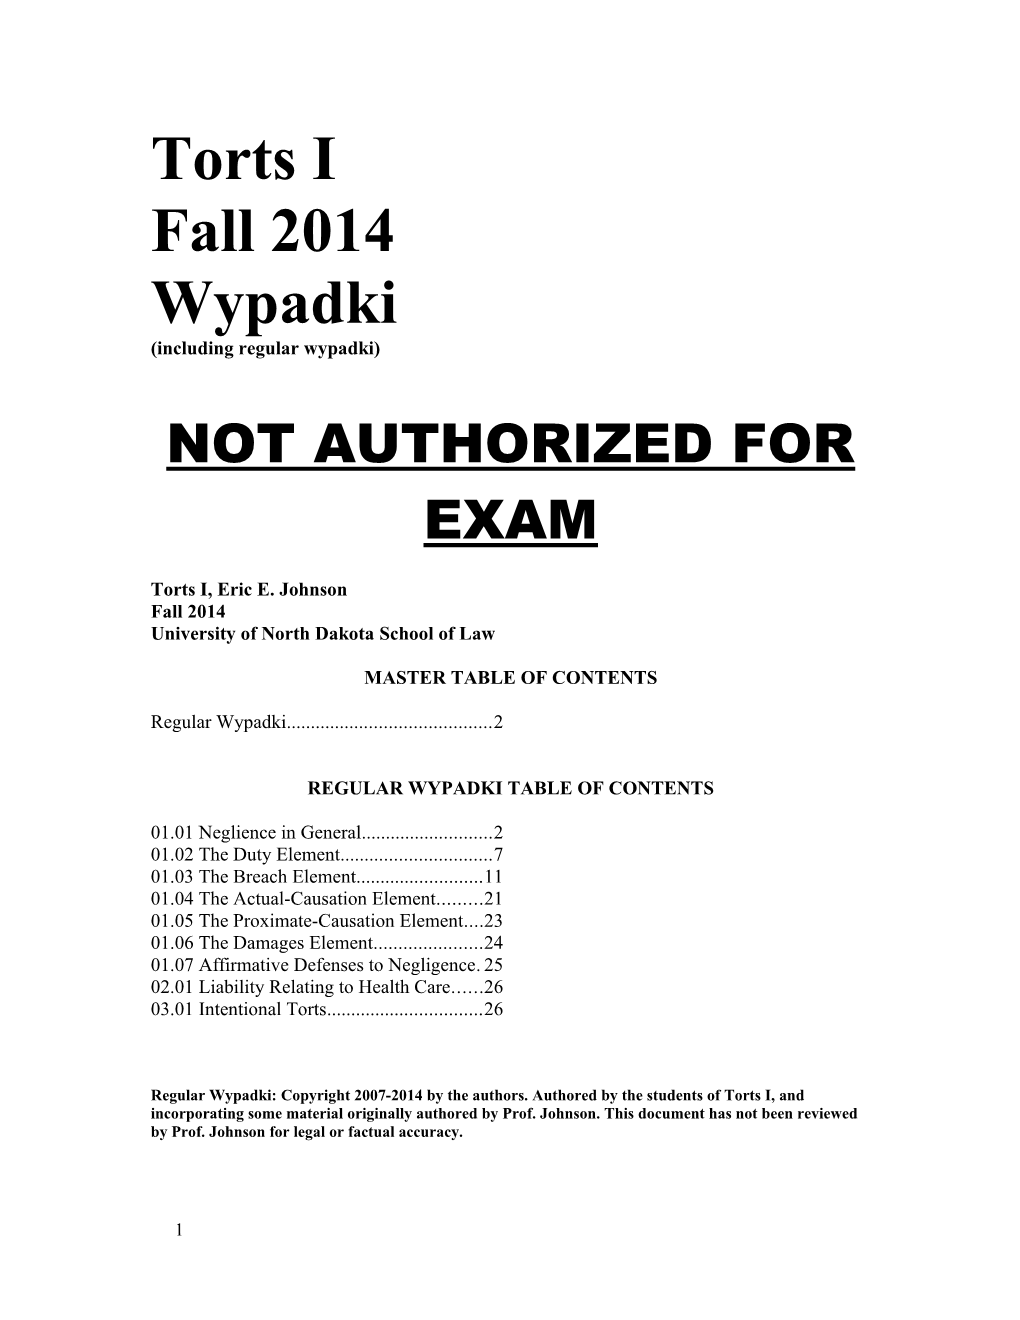 Not Authorized for Exam